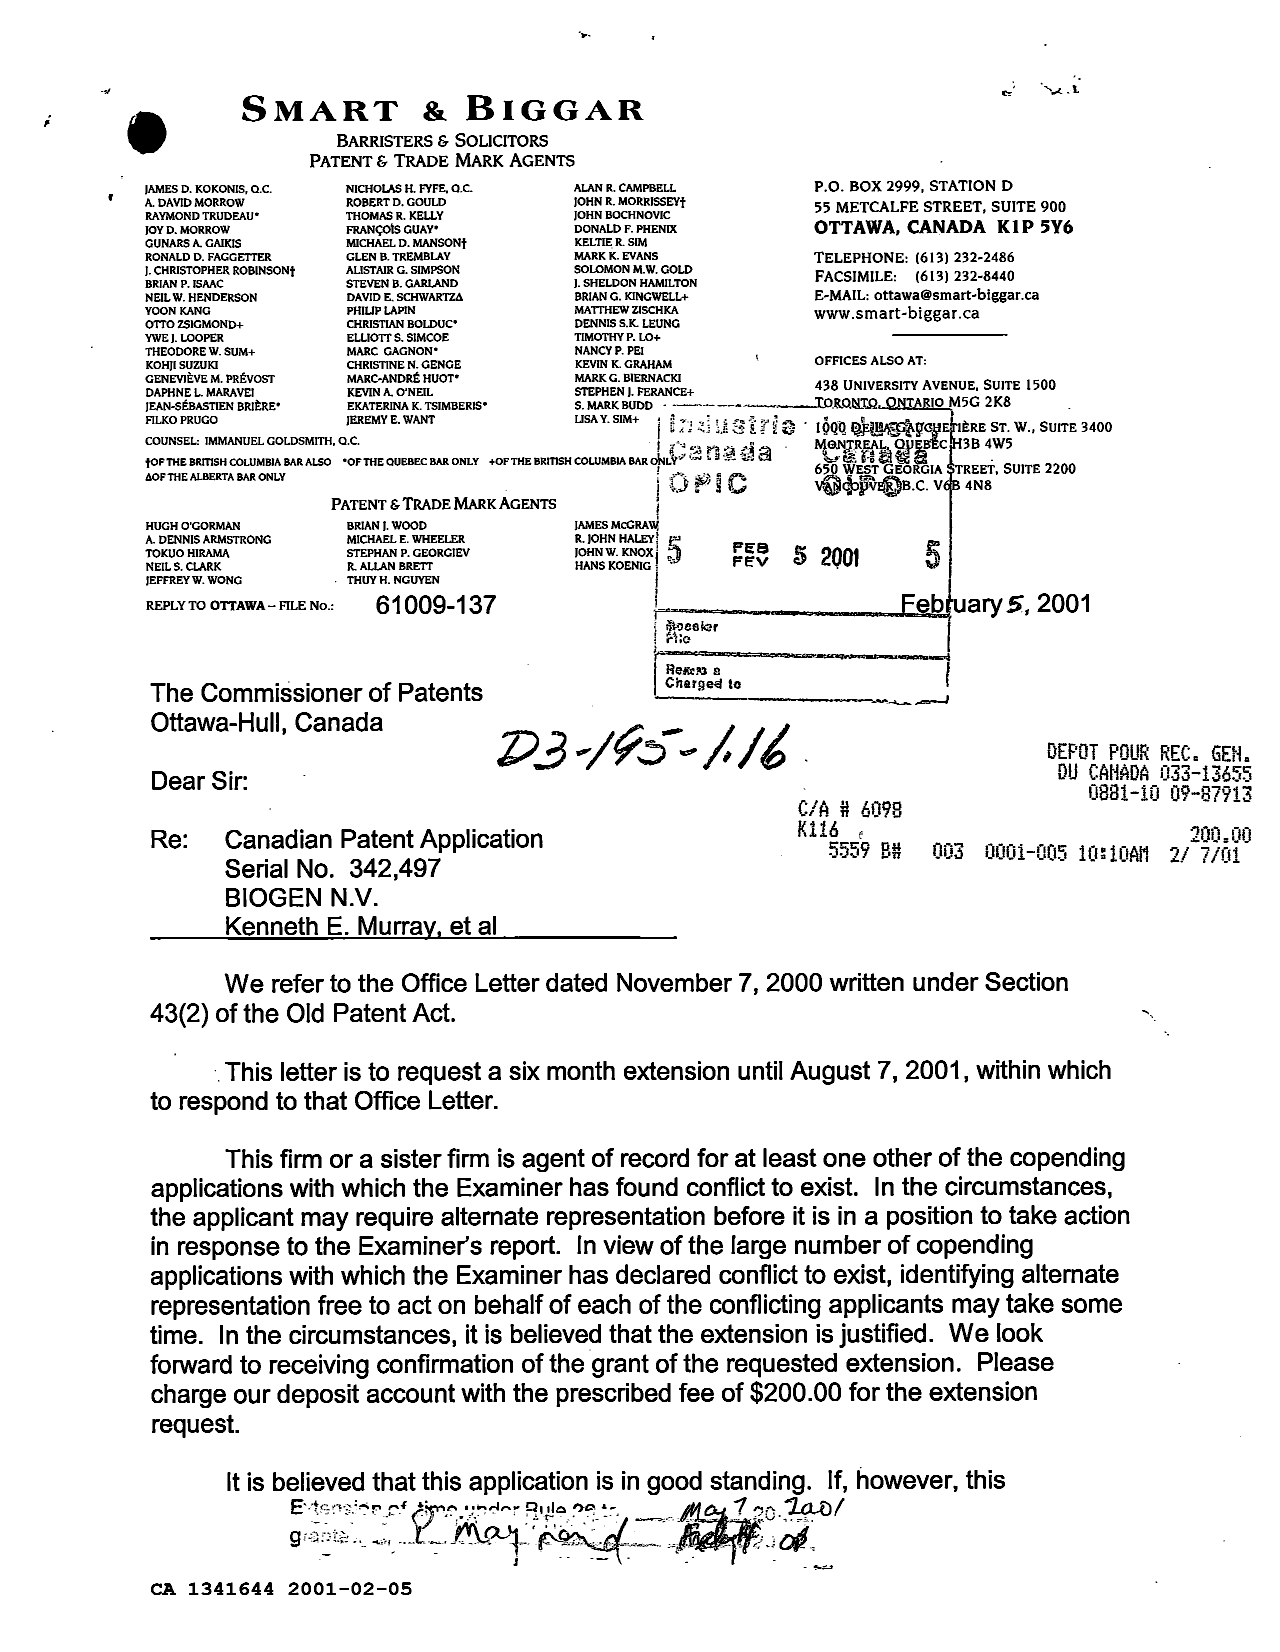 Canadian Patent Document 1341644. Prosecution Correspondence 20010205. Image 1 of 2